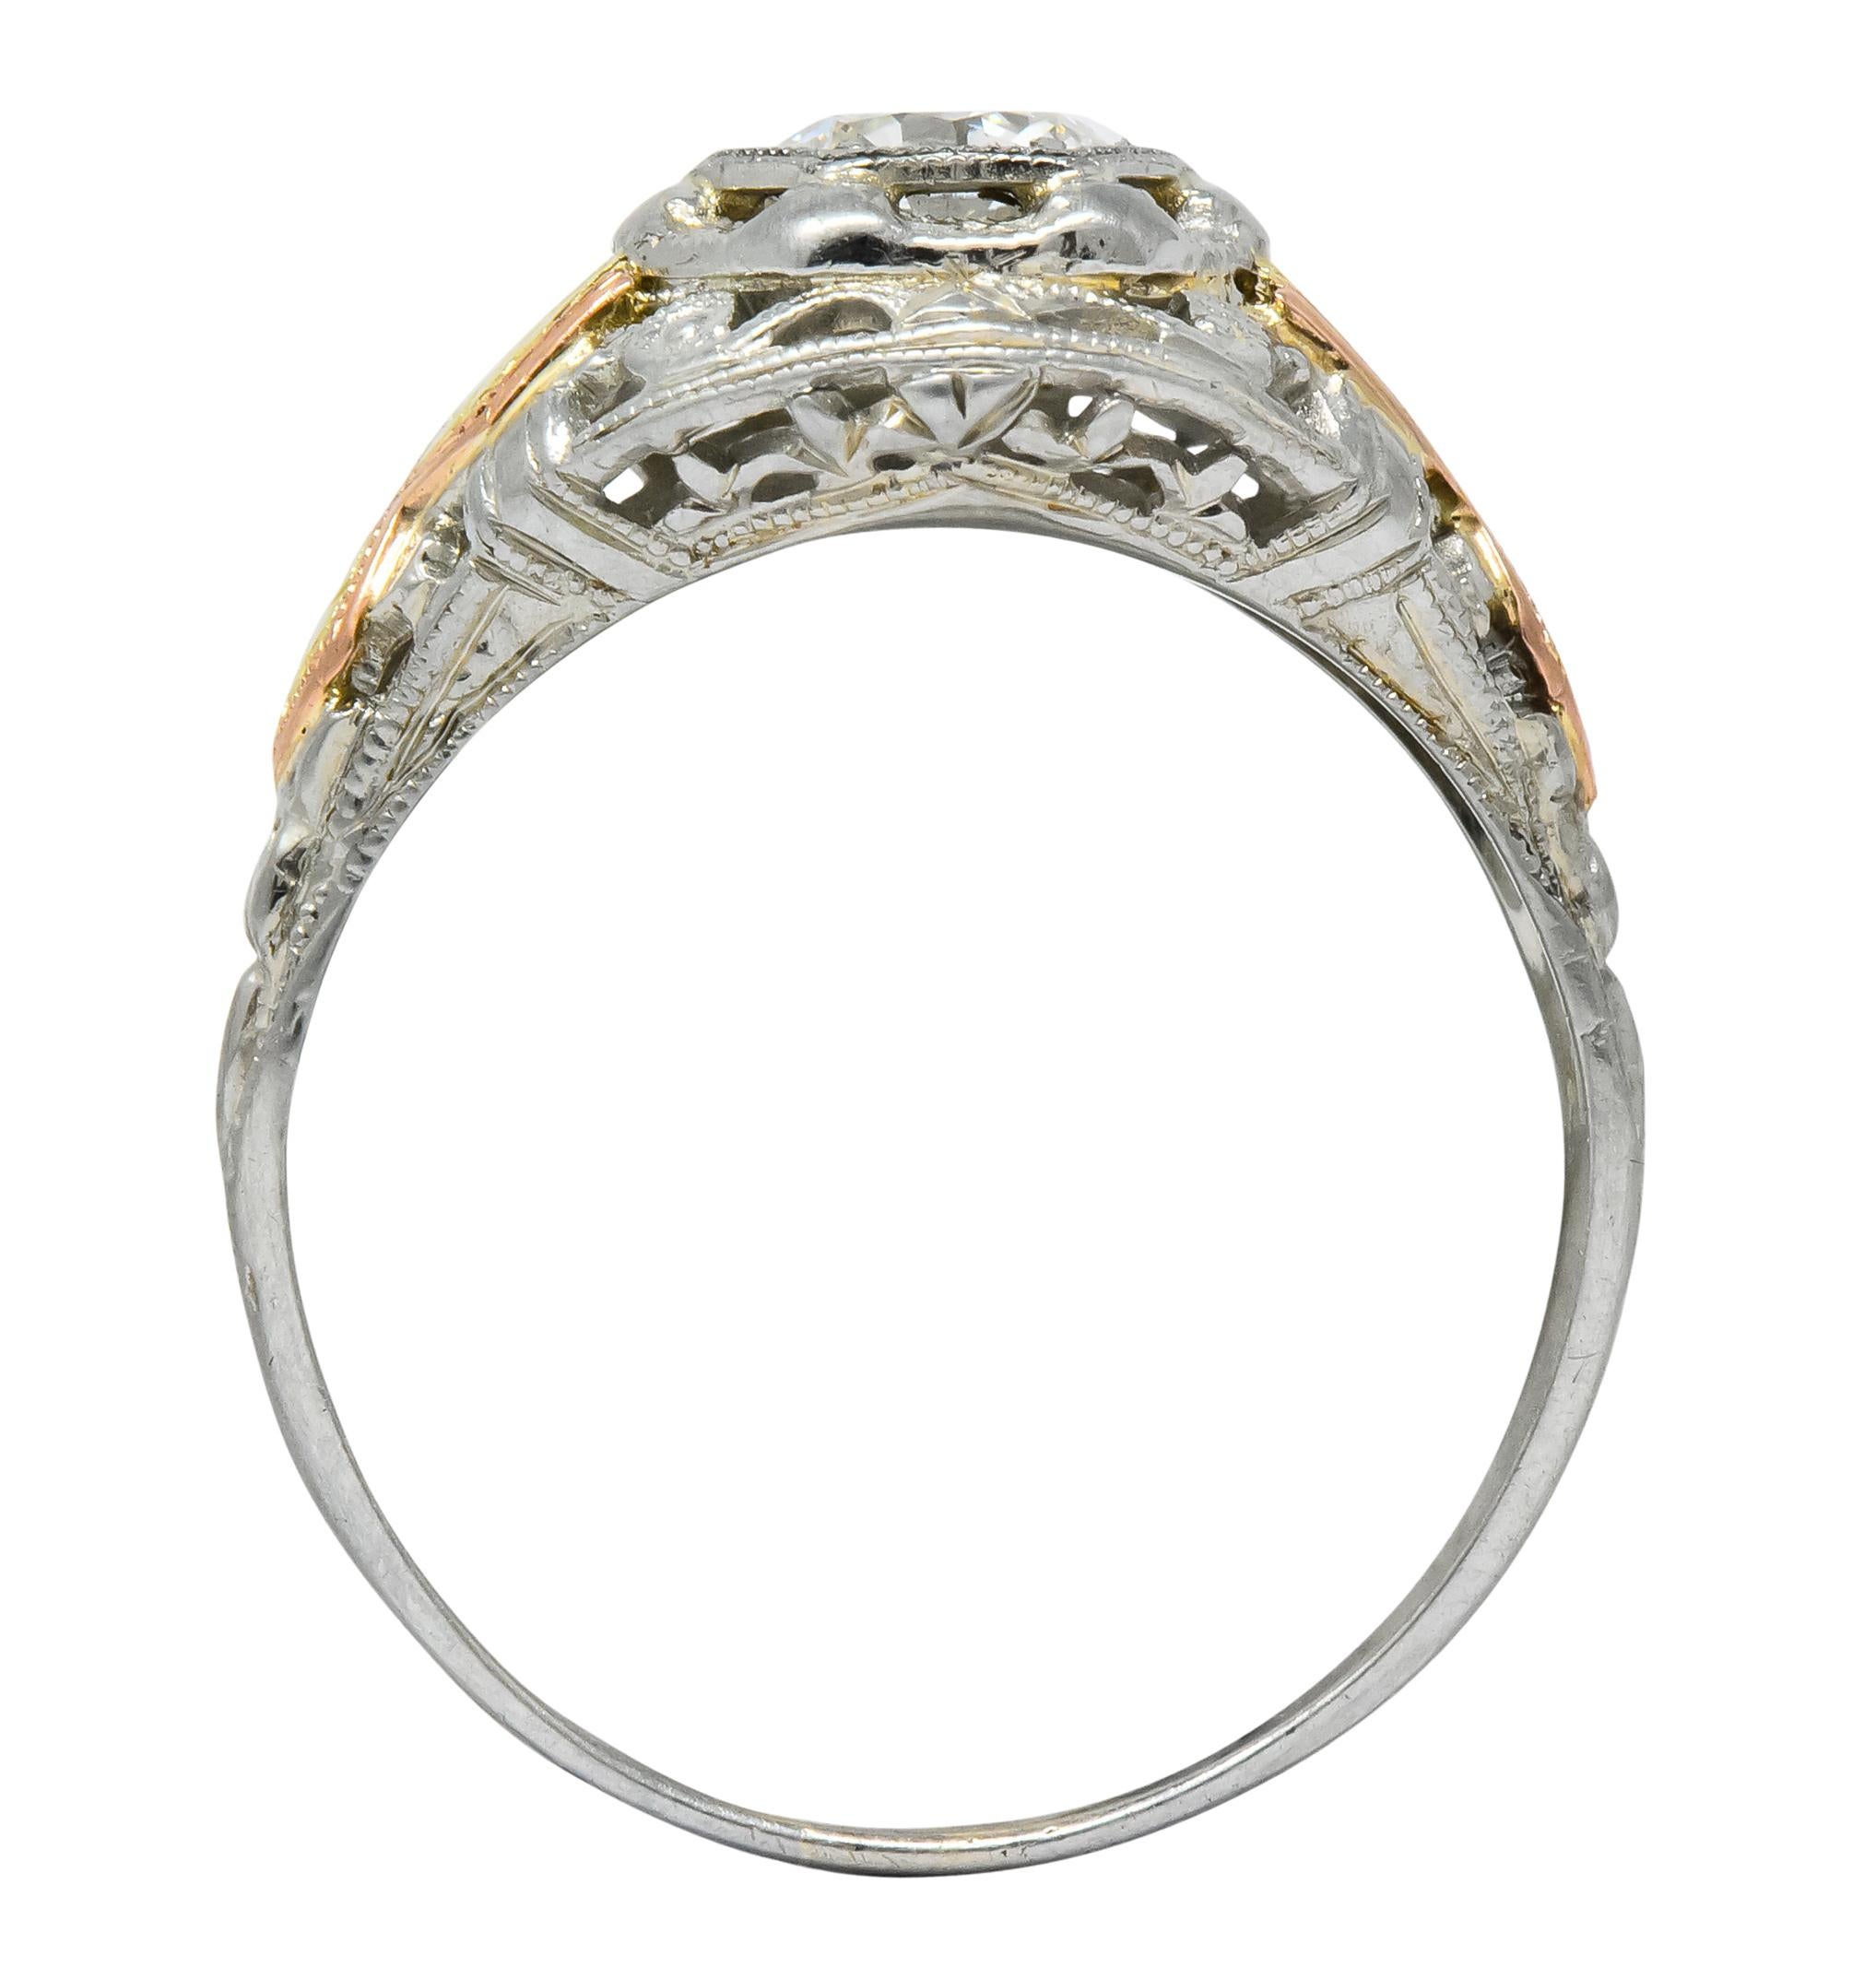 Bud & Blossom Art Deco Diamond 14 Karat Tri-Colored Gold Engagement Ring 2